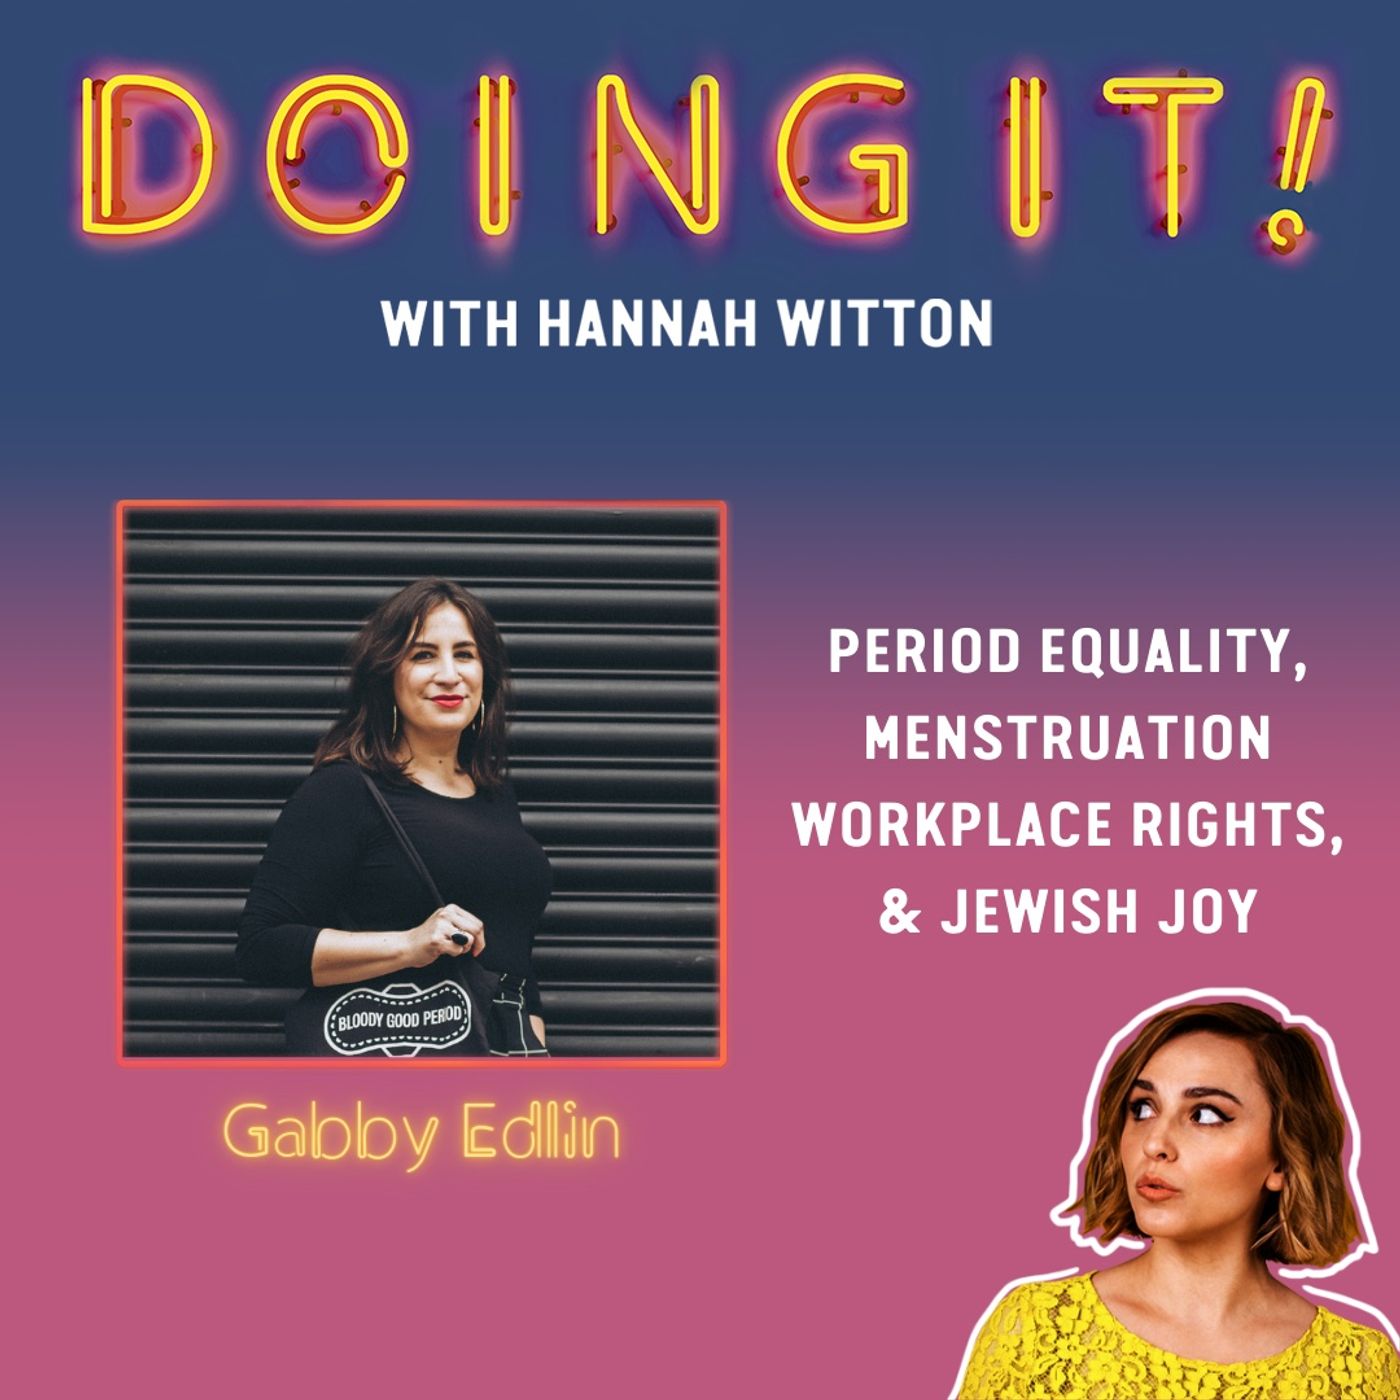 Period Equality, Menstruation Workplace Rights & Jewish Joy With Gabby Edlin